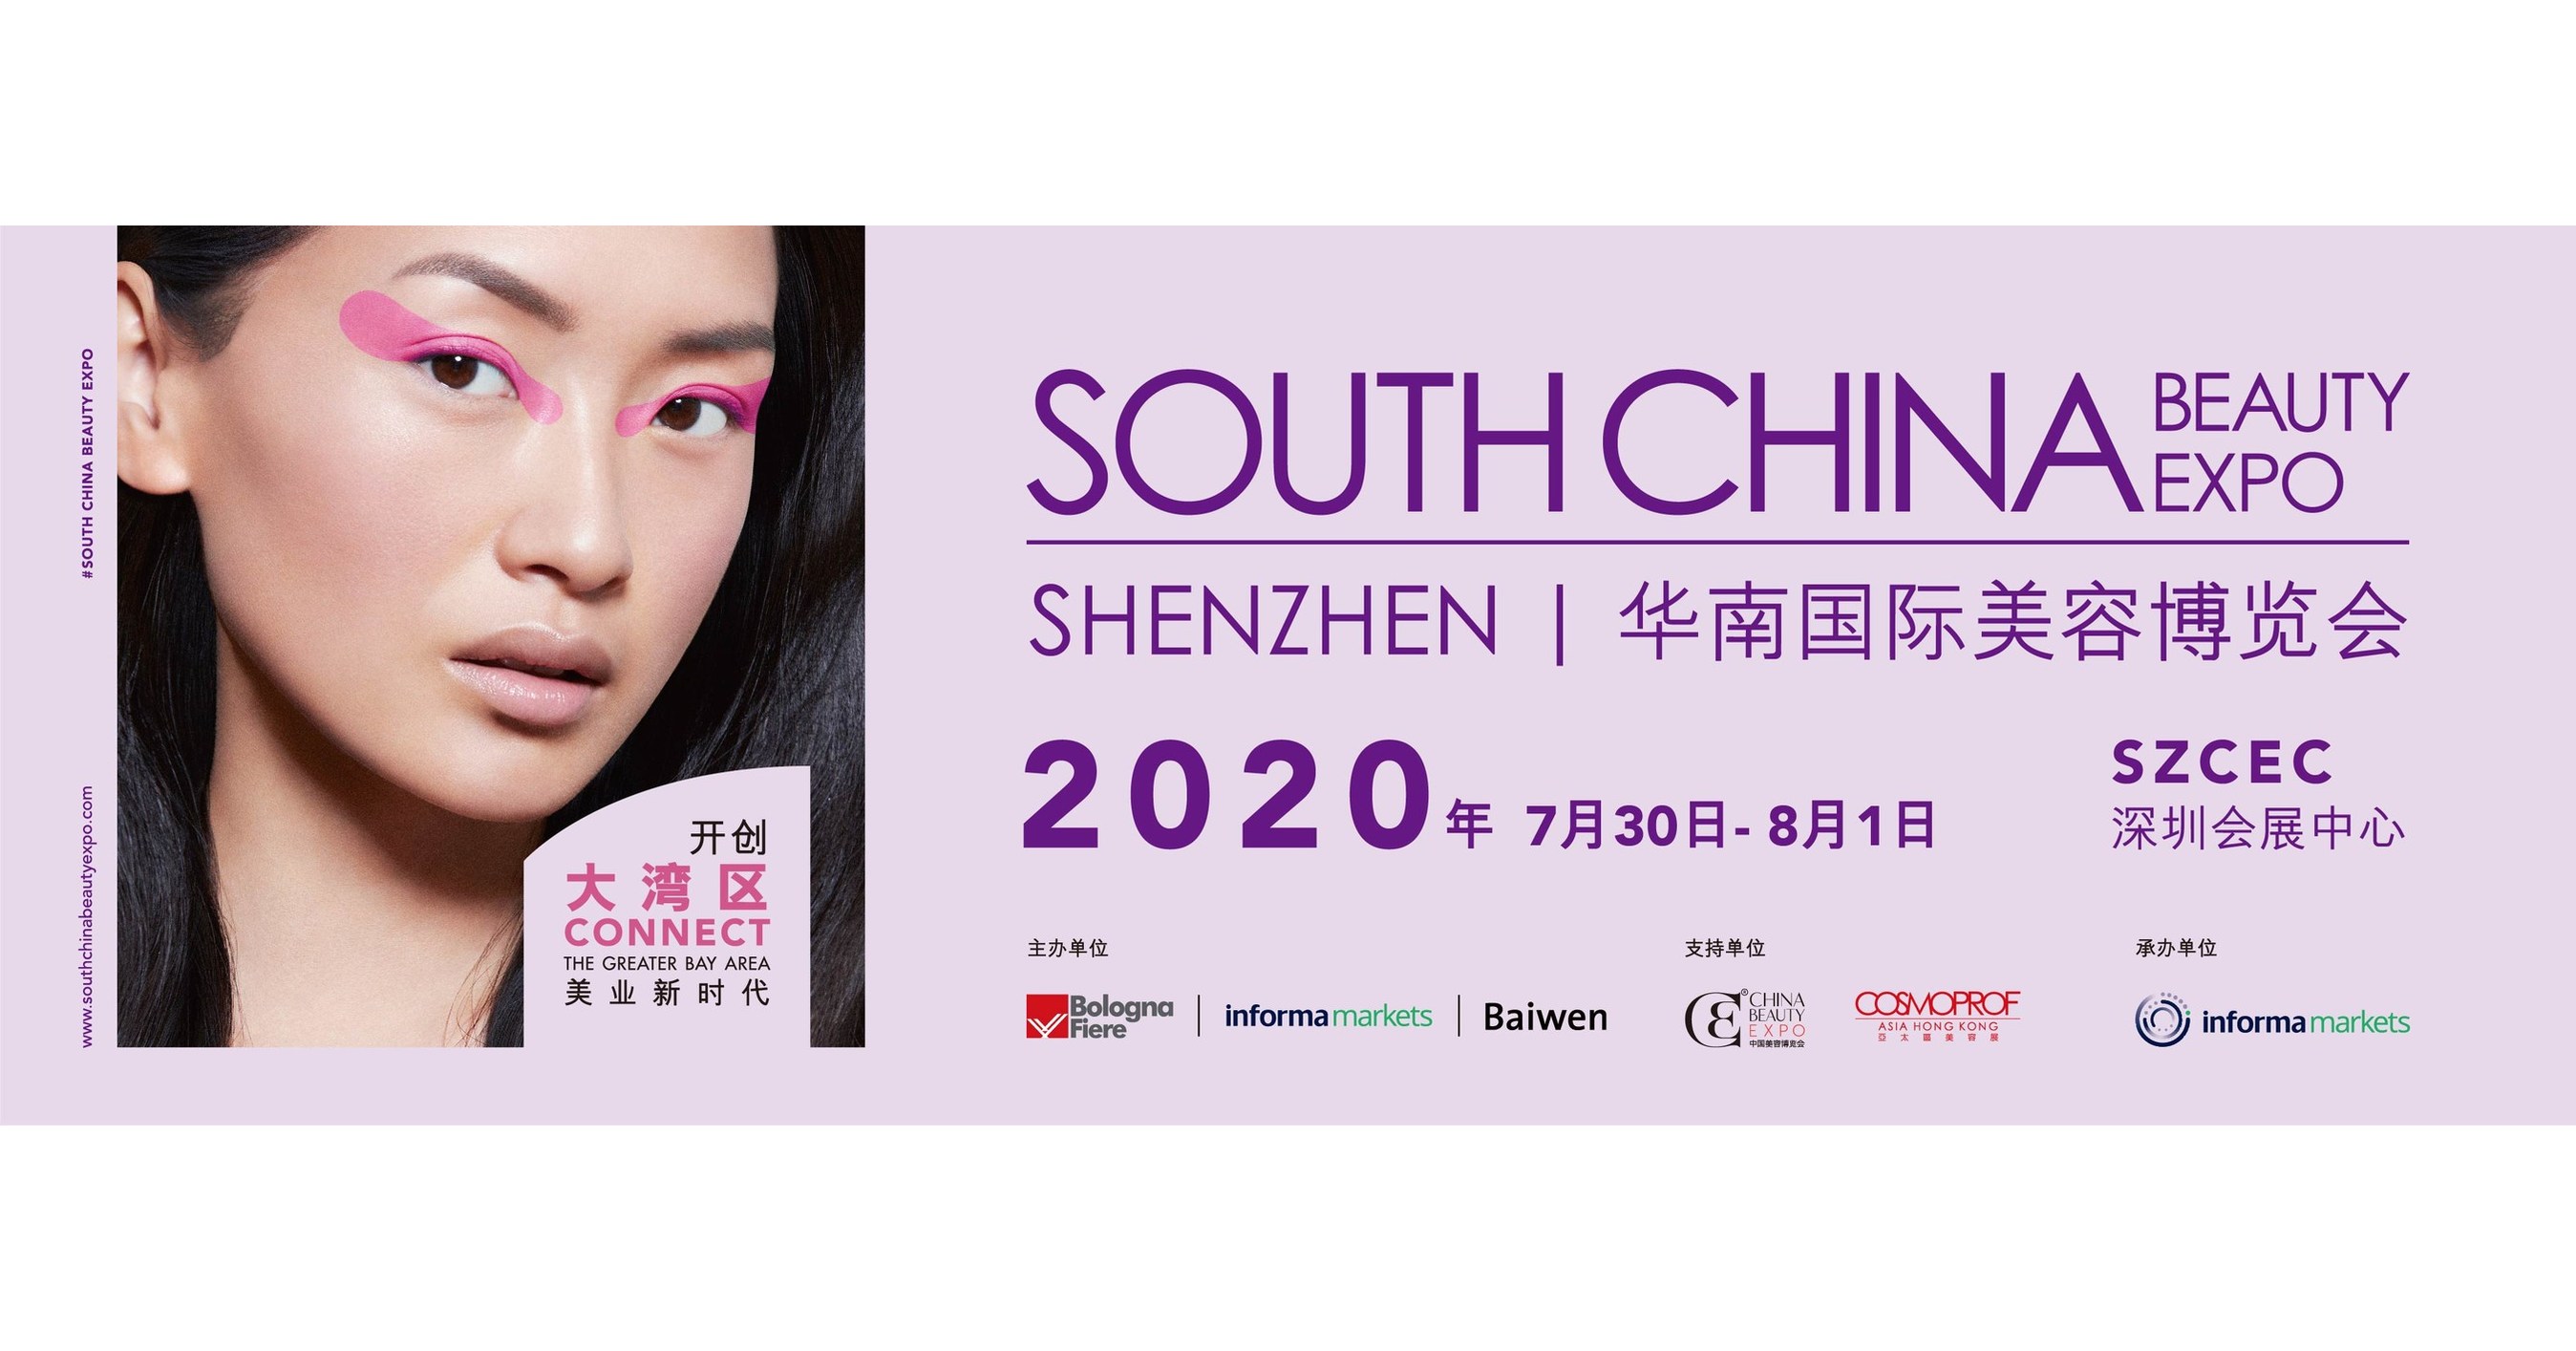 South China Beauty Expo Creates New Era of Beauty Industry in Greater